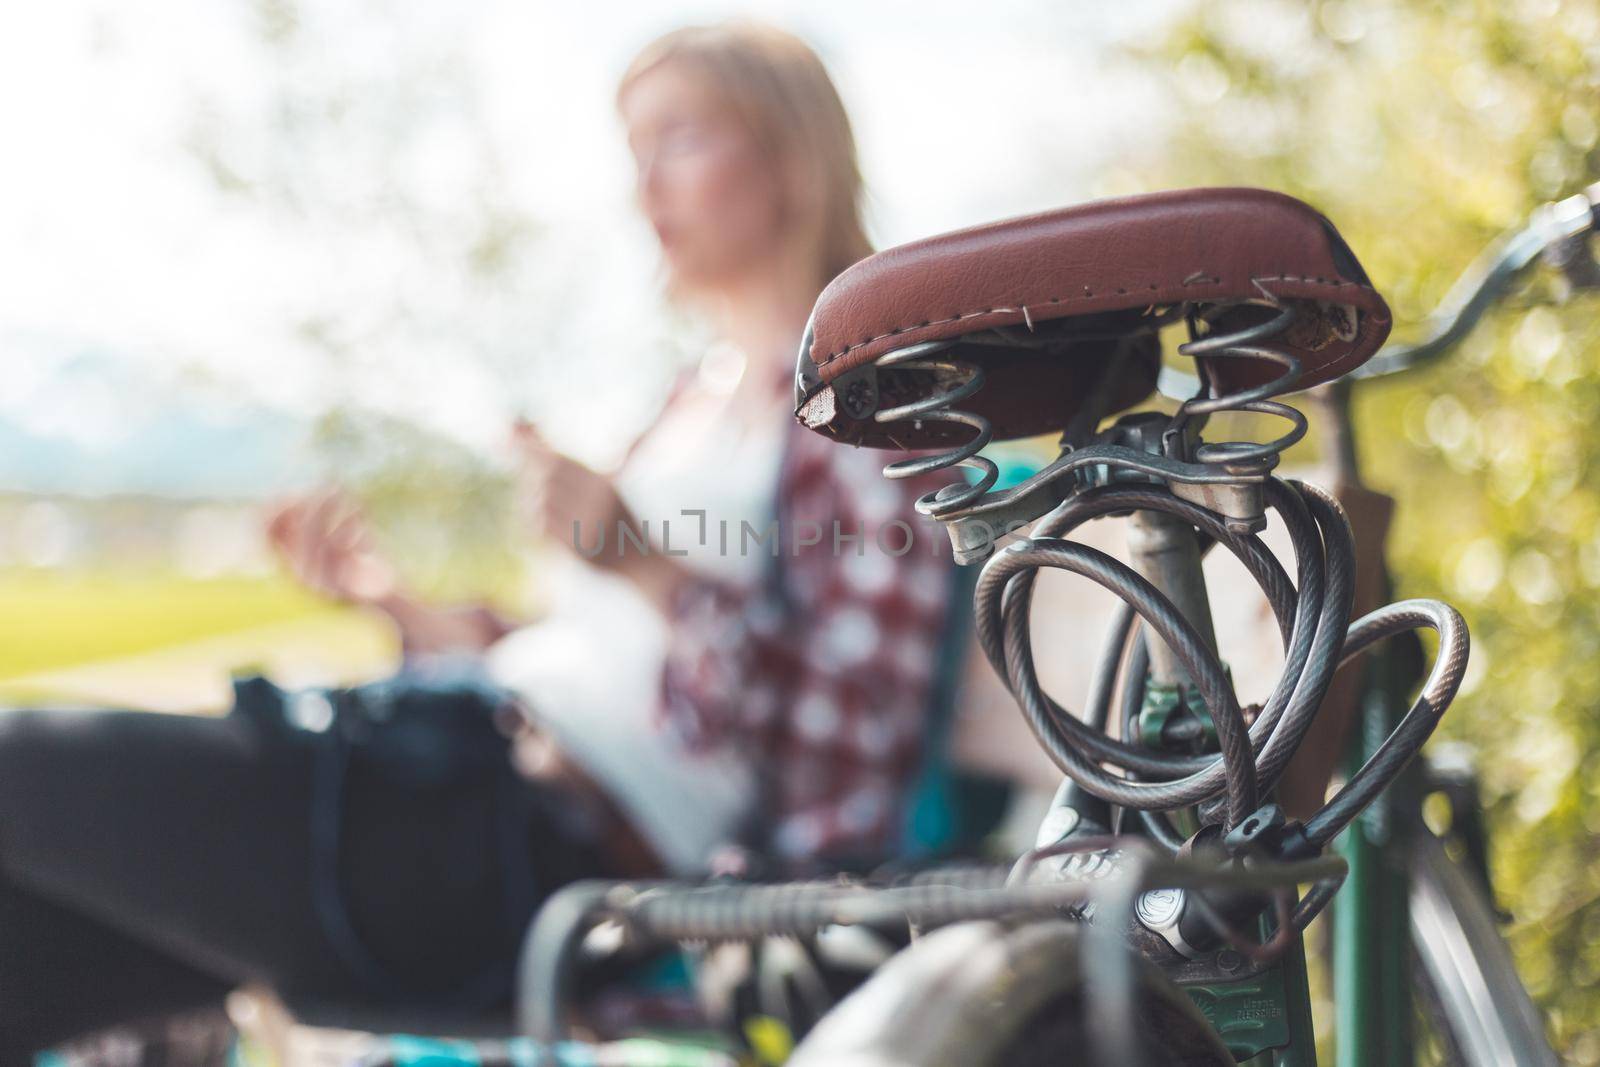 Retro bike tour: Seat of bike outdoors, rural scene, blonde girl sitting in blurry background by Daxenbichler